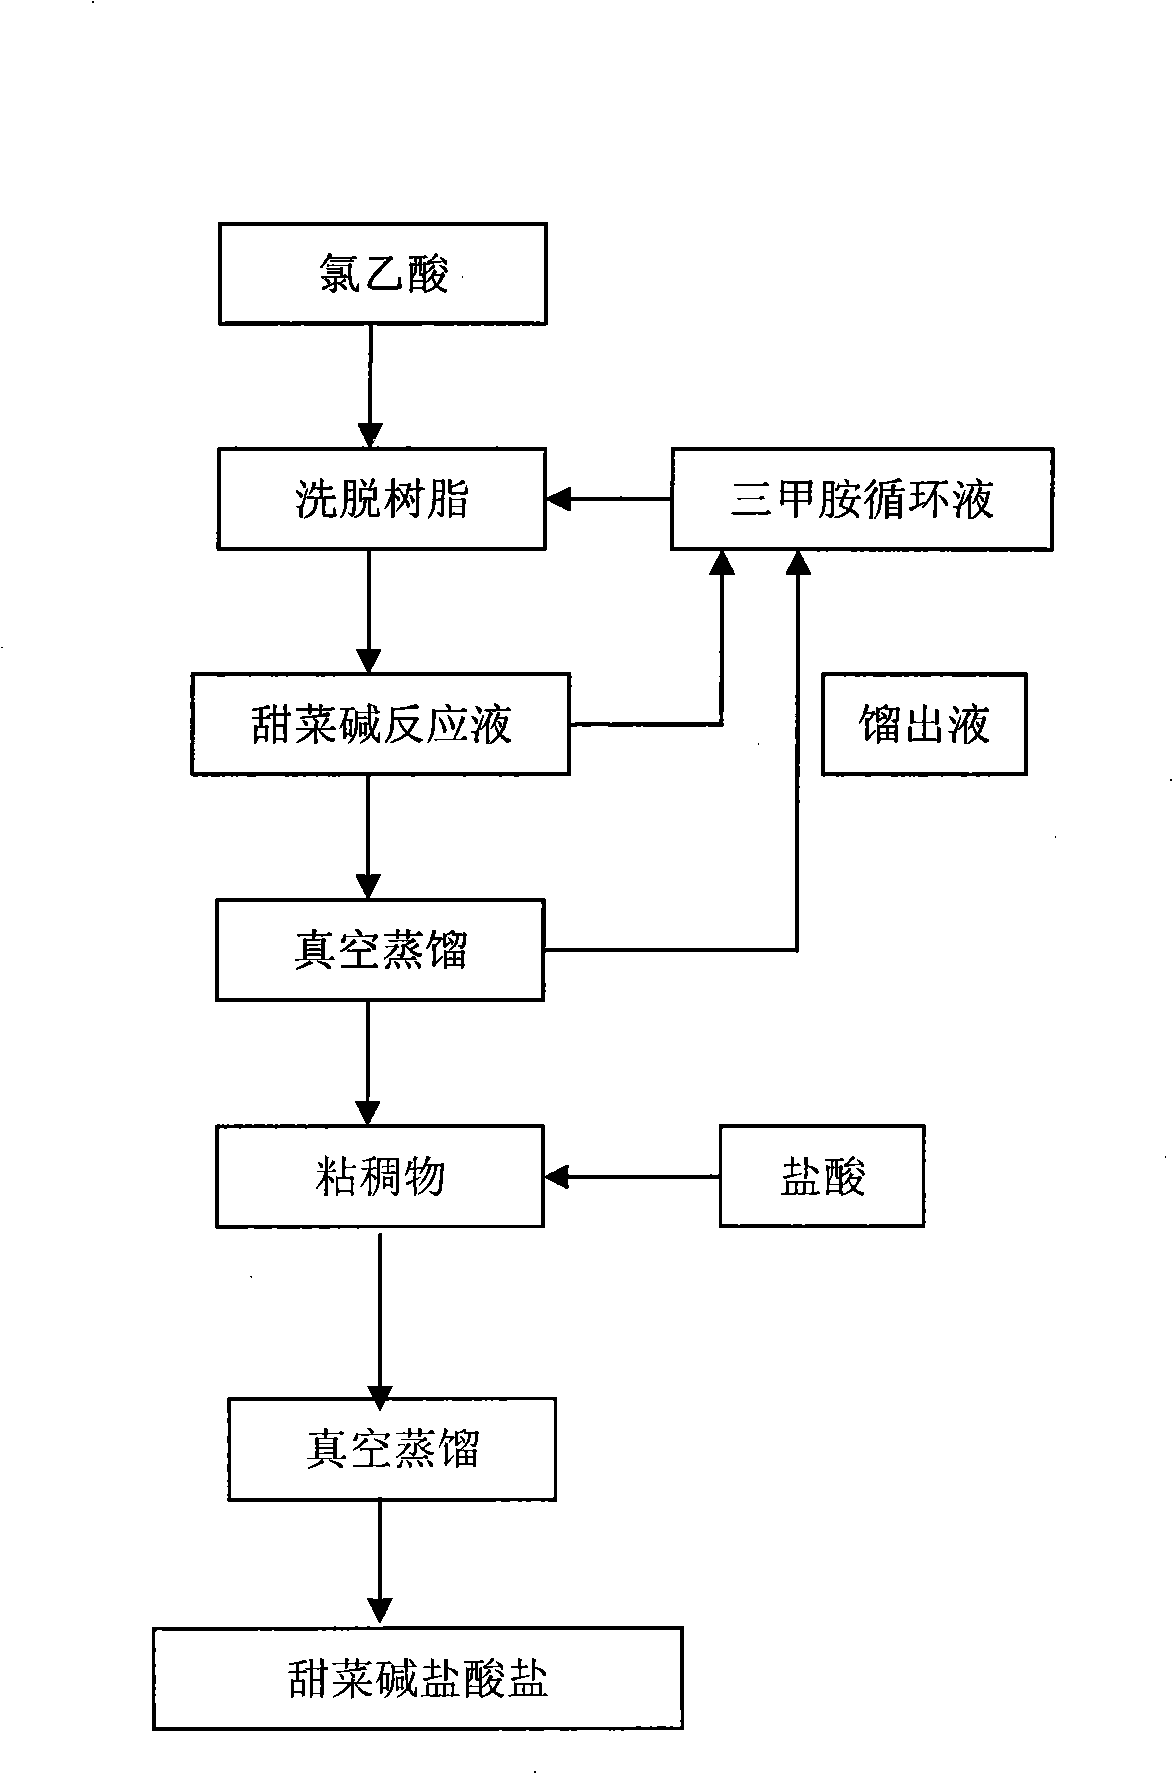 Synthetic method of beet alkali and beet alkali hydrochlorate